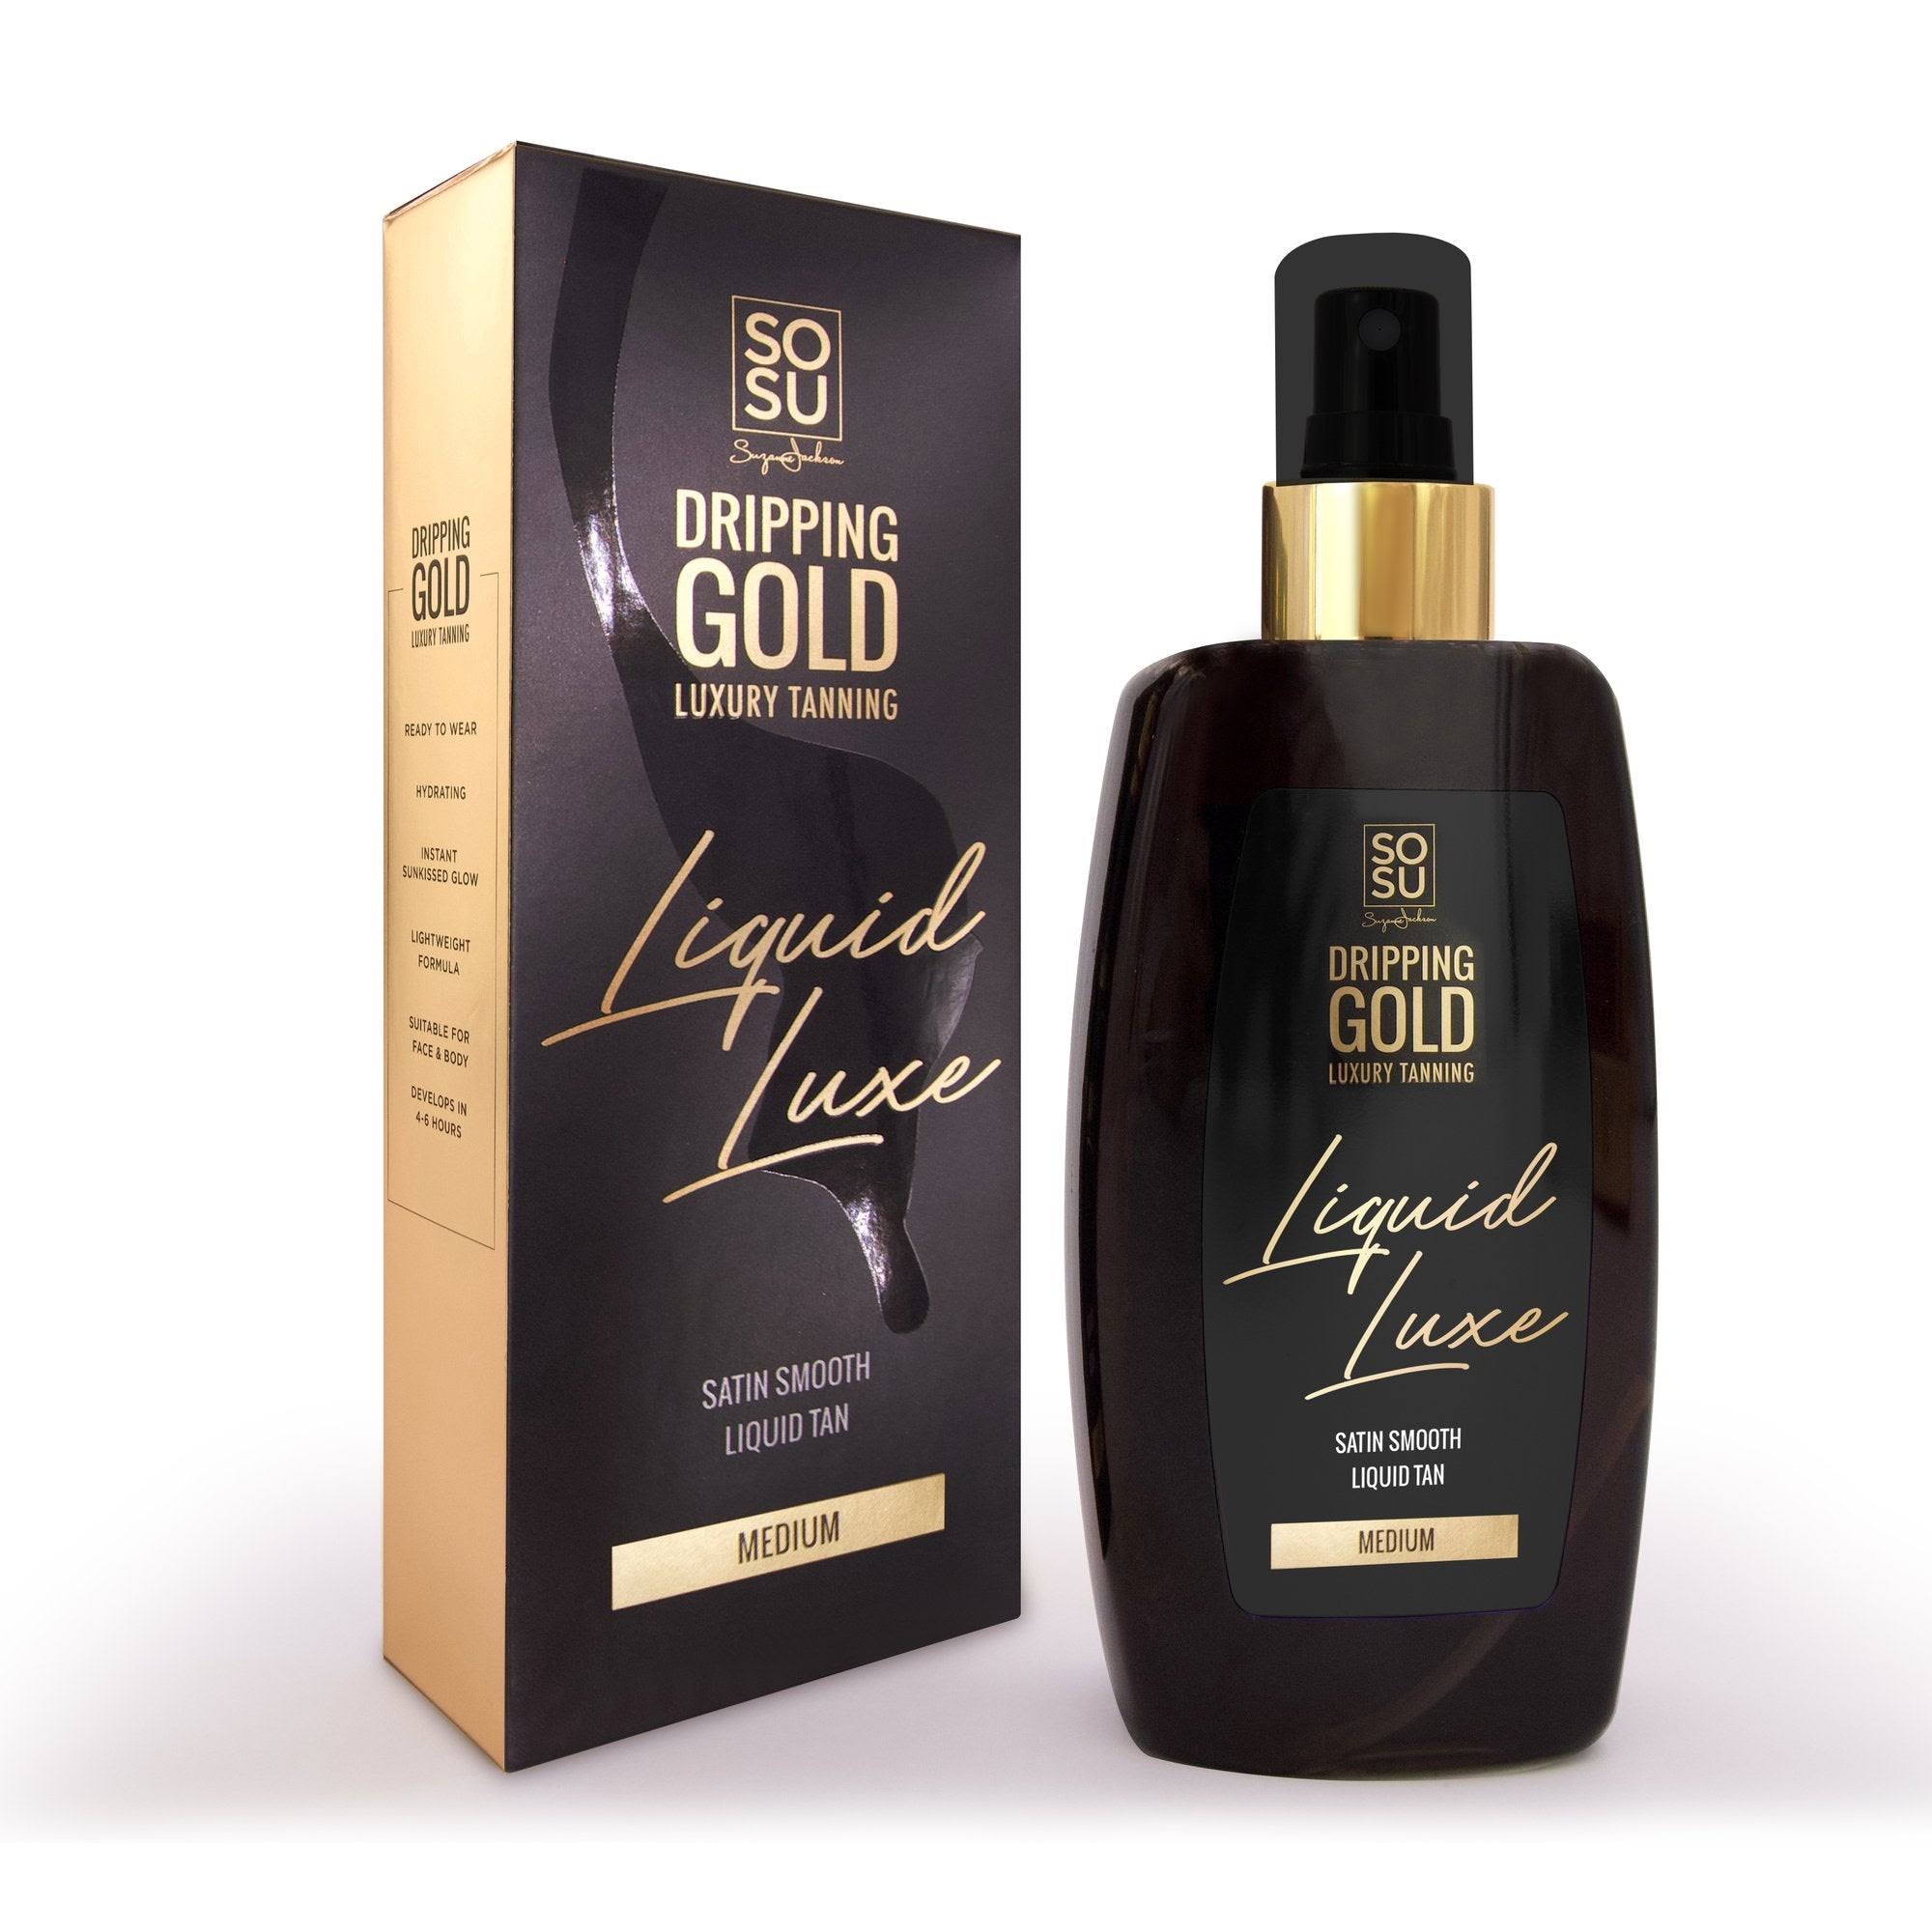 SOSU by SJ Dripping Gold Luxury Tanning Medium Liquid Luxe Tan